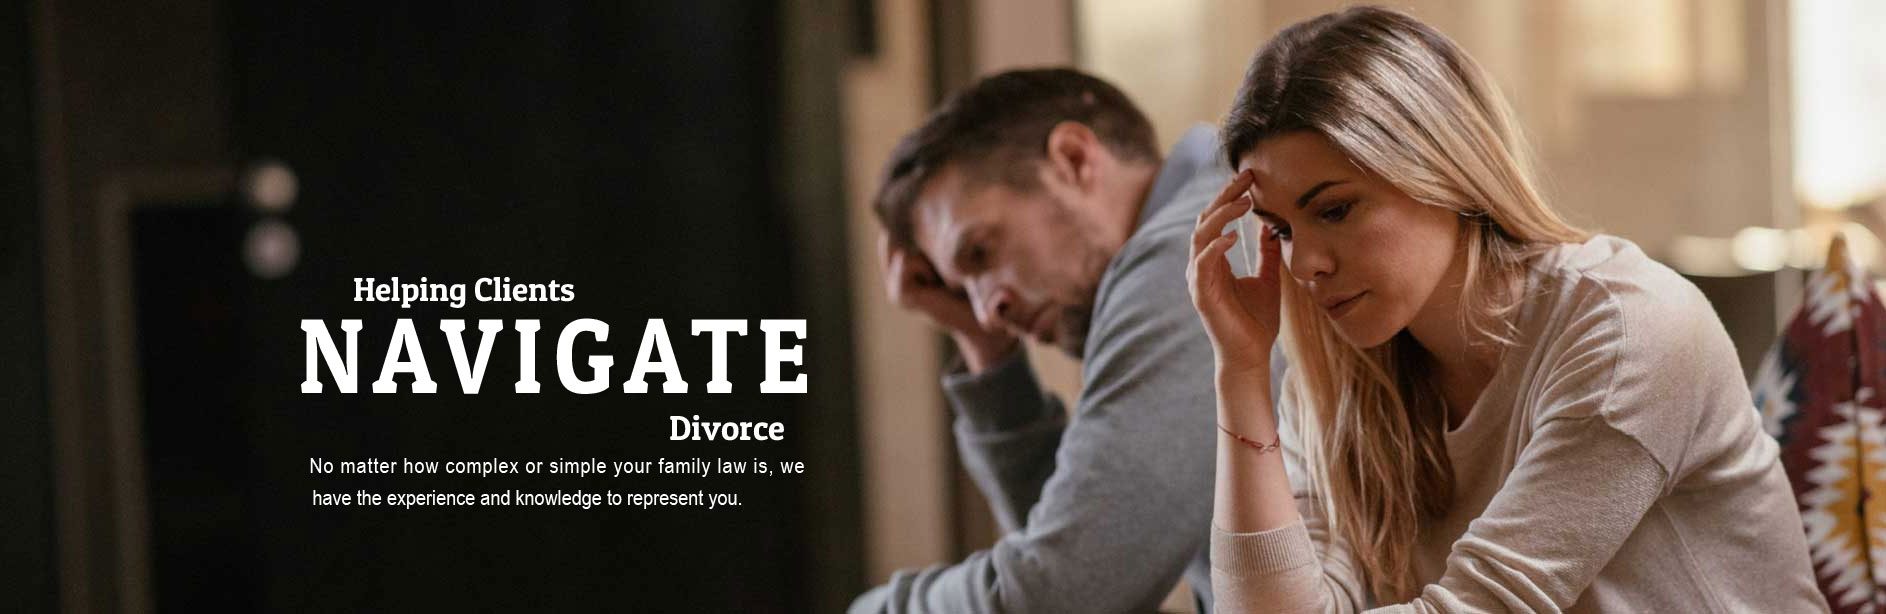 Helping Clients Navigate Divorce